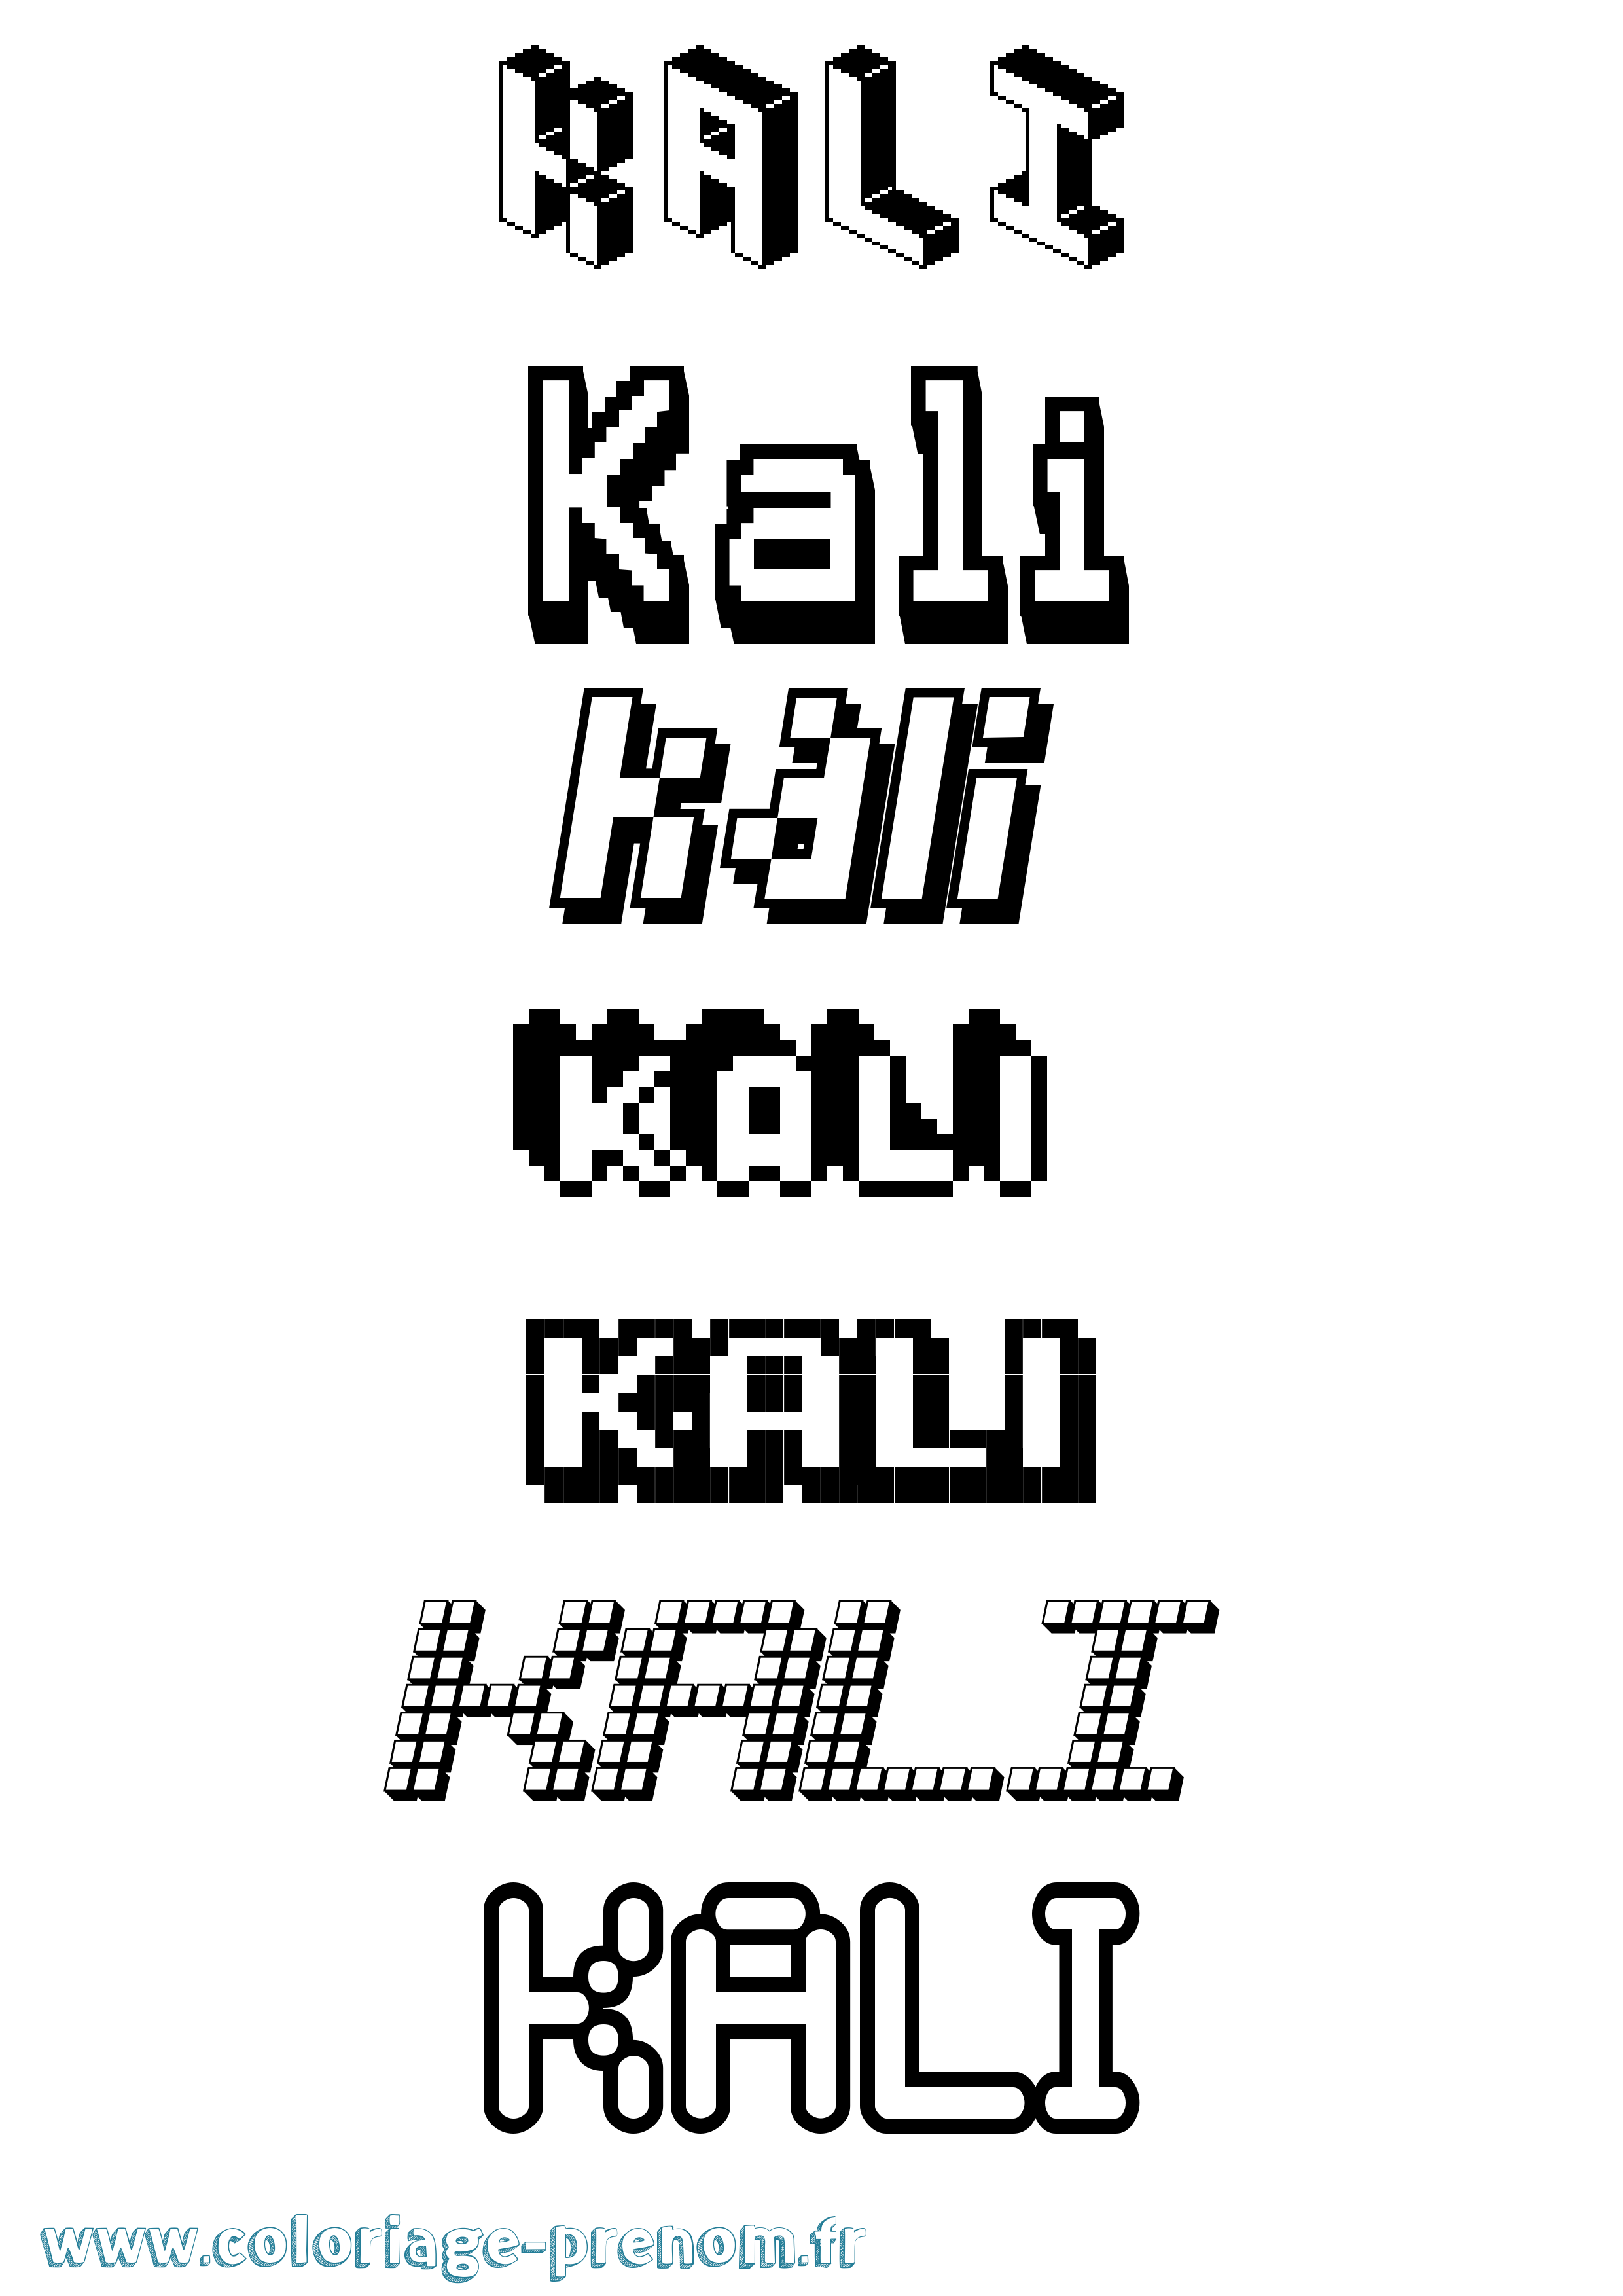 Coloriage prénom Kali Pixel